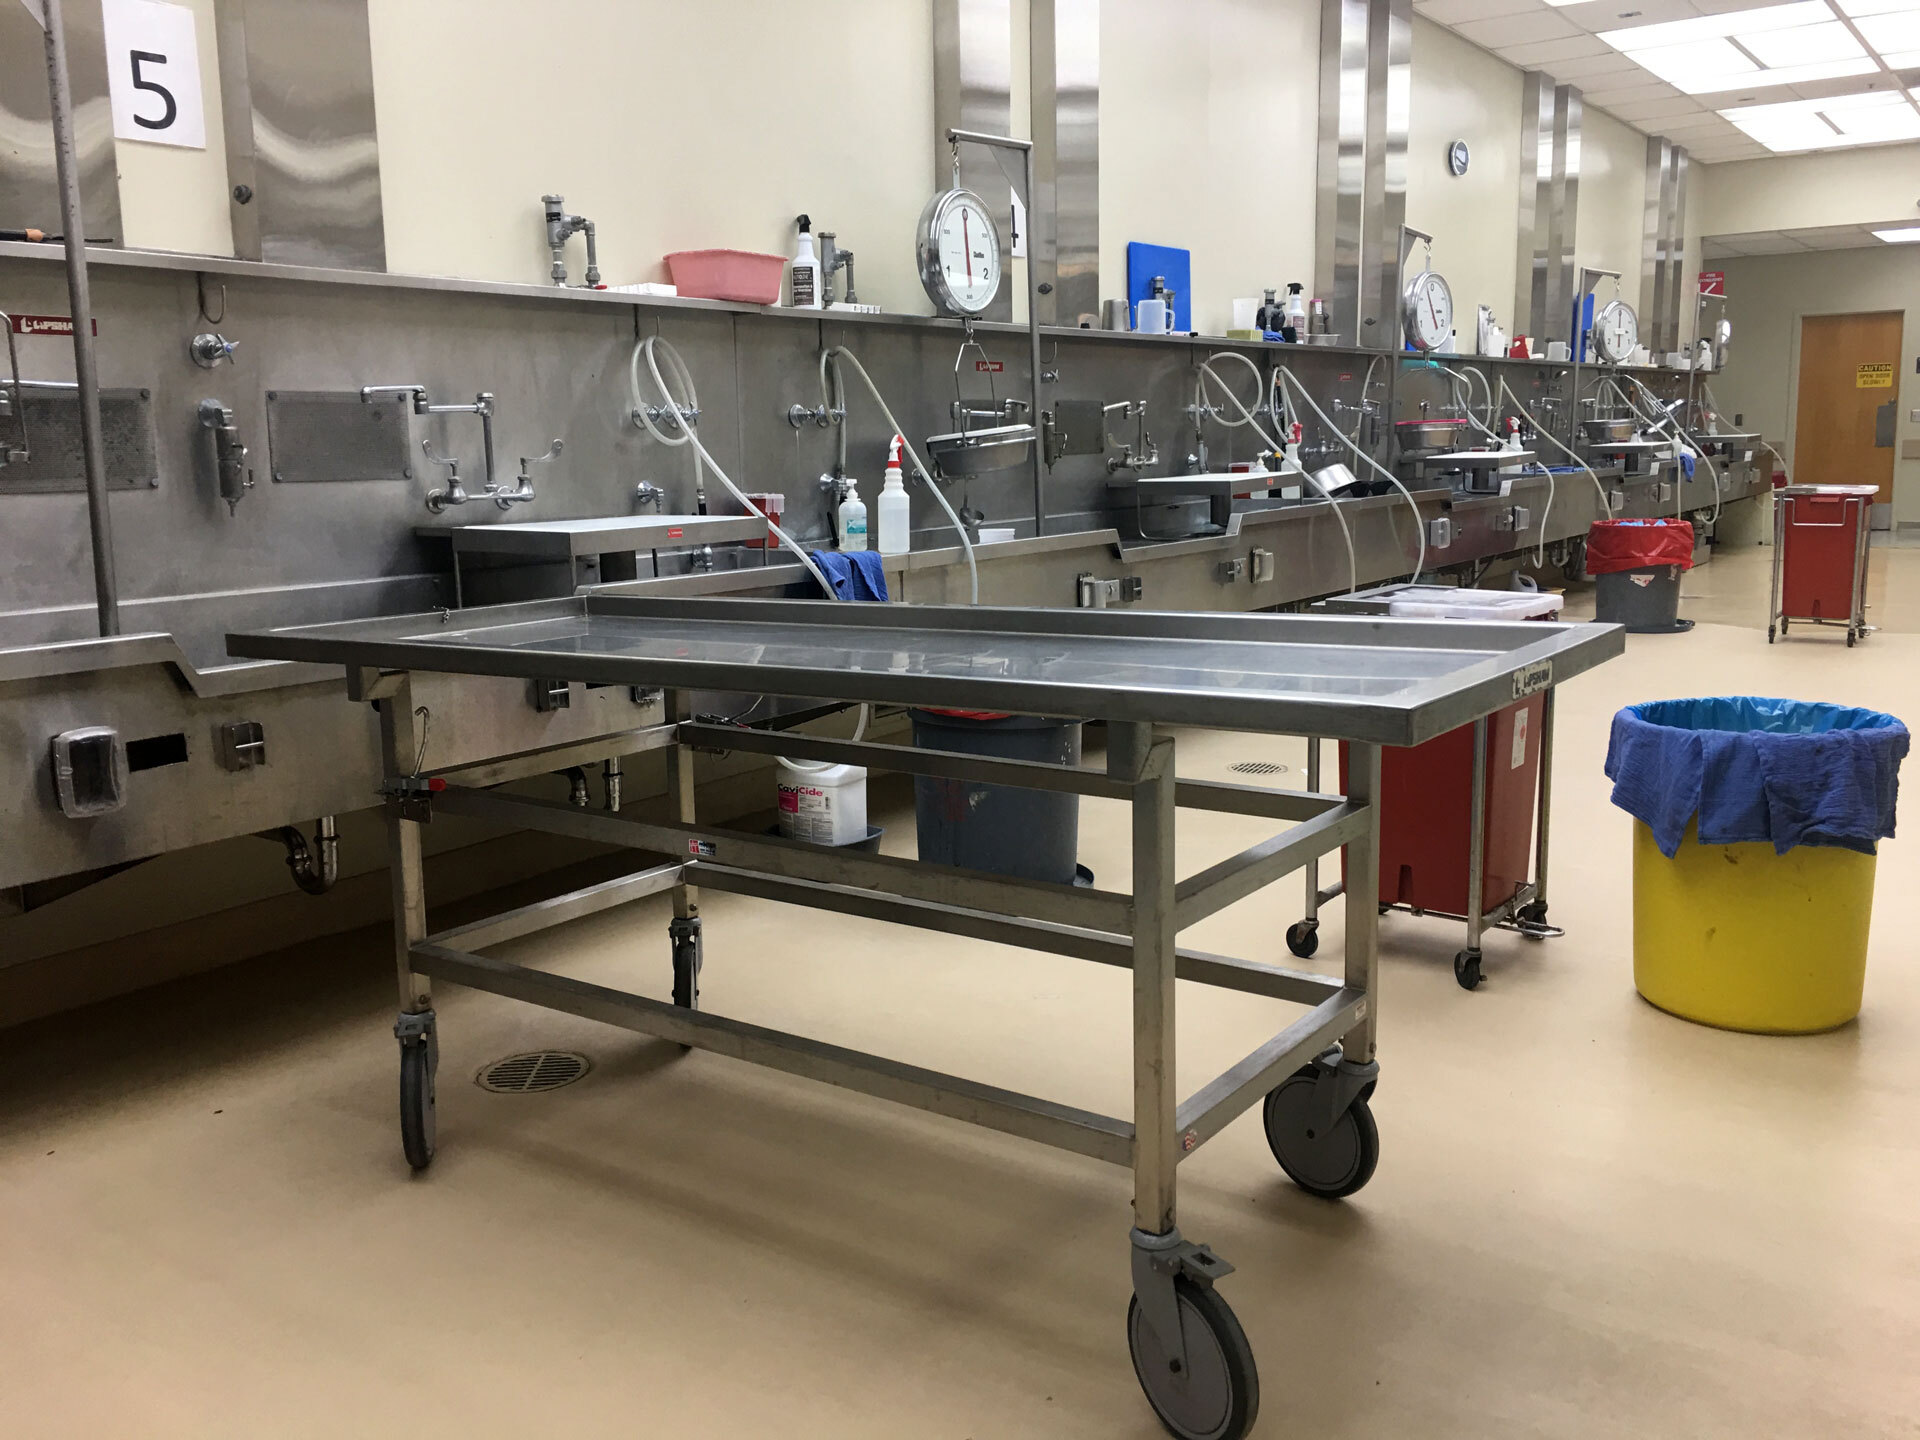 An examination table in the Santa Clara County morgue at the medical examiner's office.